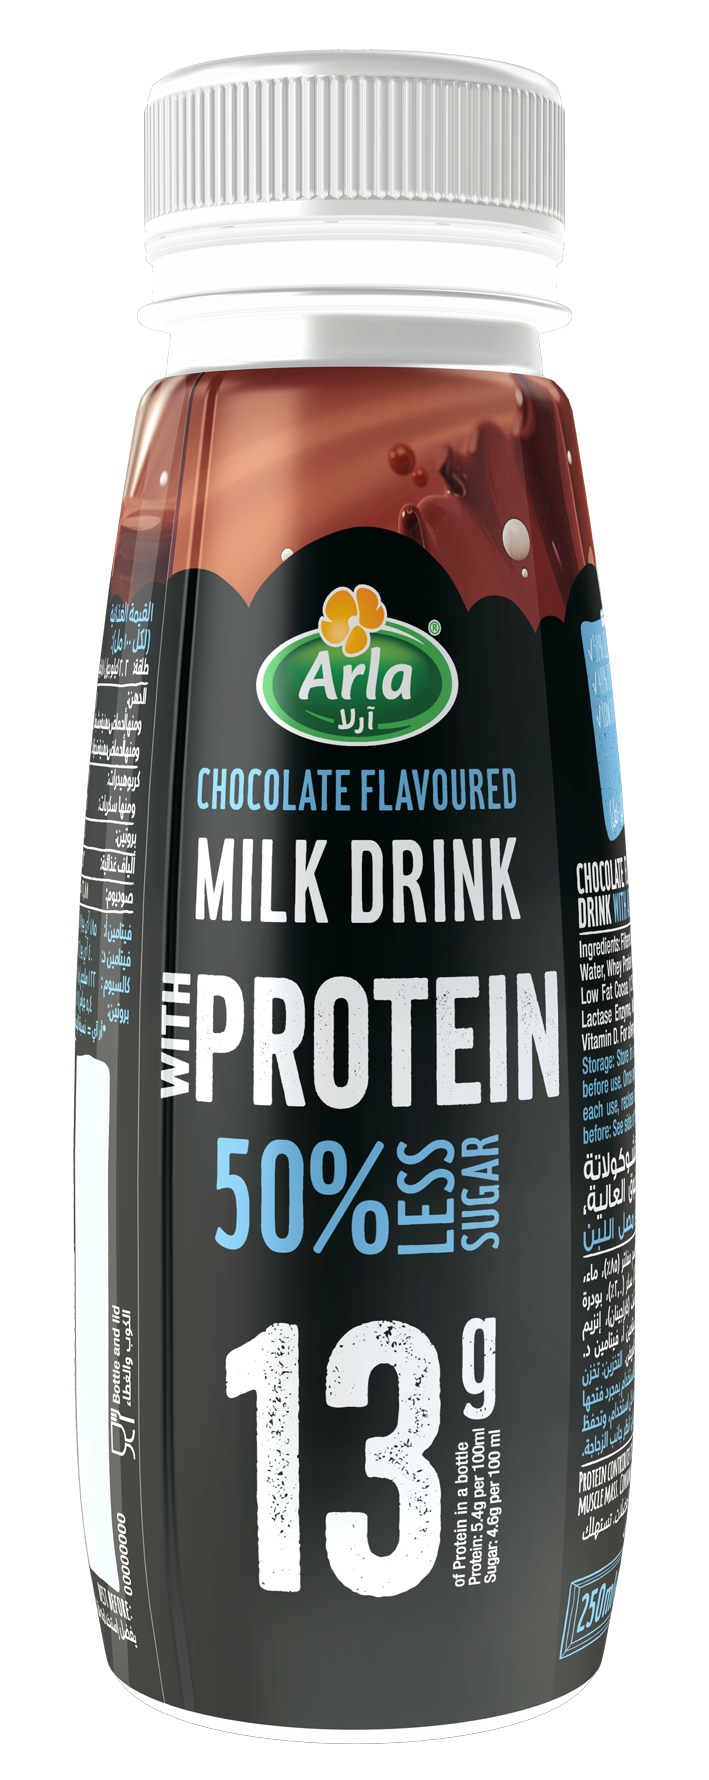 Protein Chocolate Flavored Milk Drink 50% Less Sugar 250ML